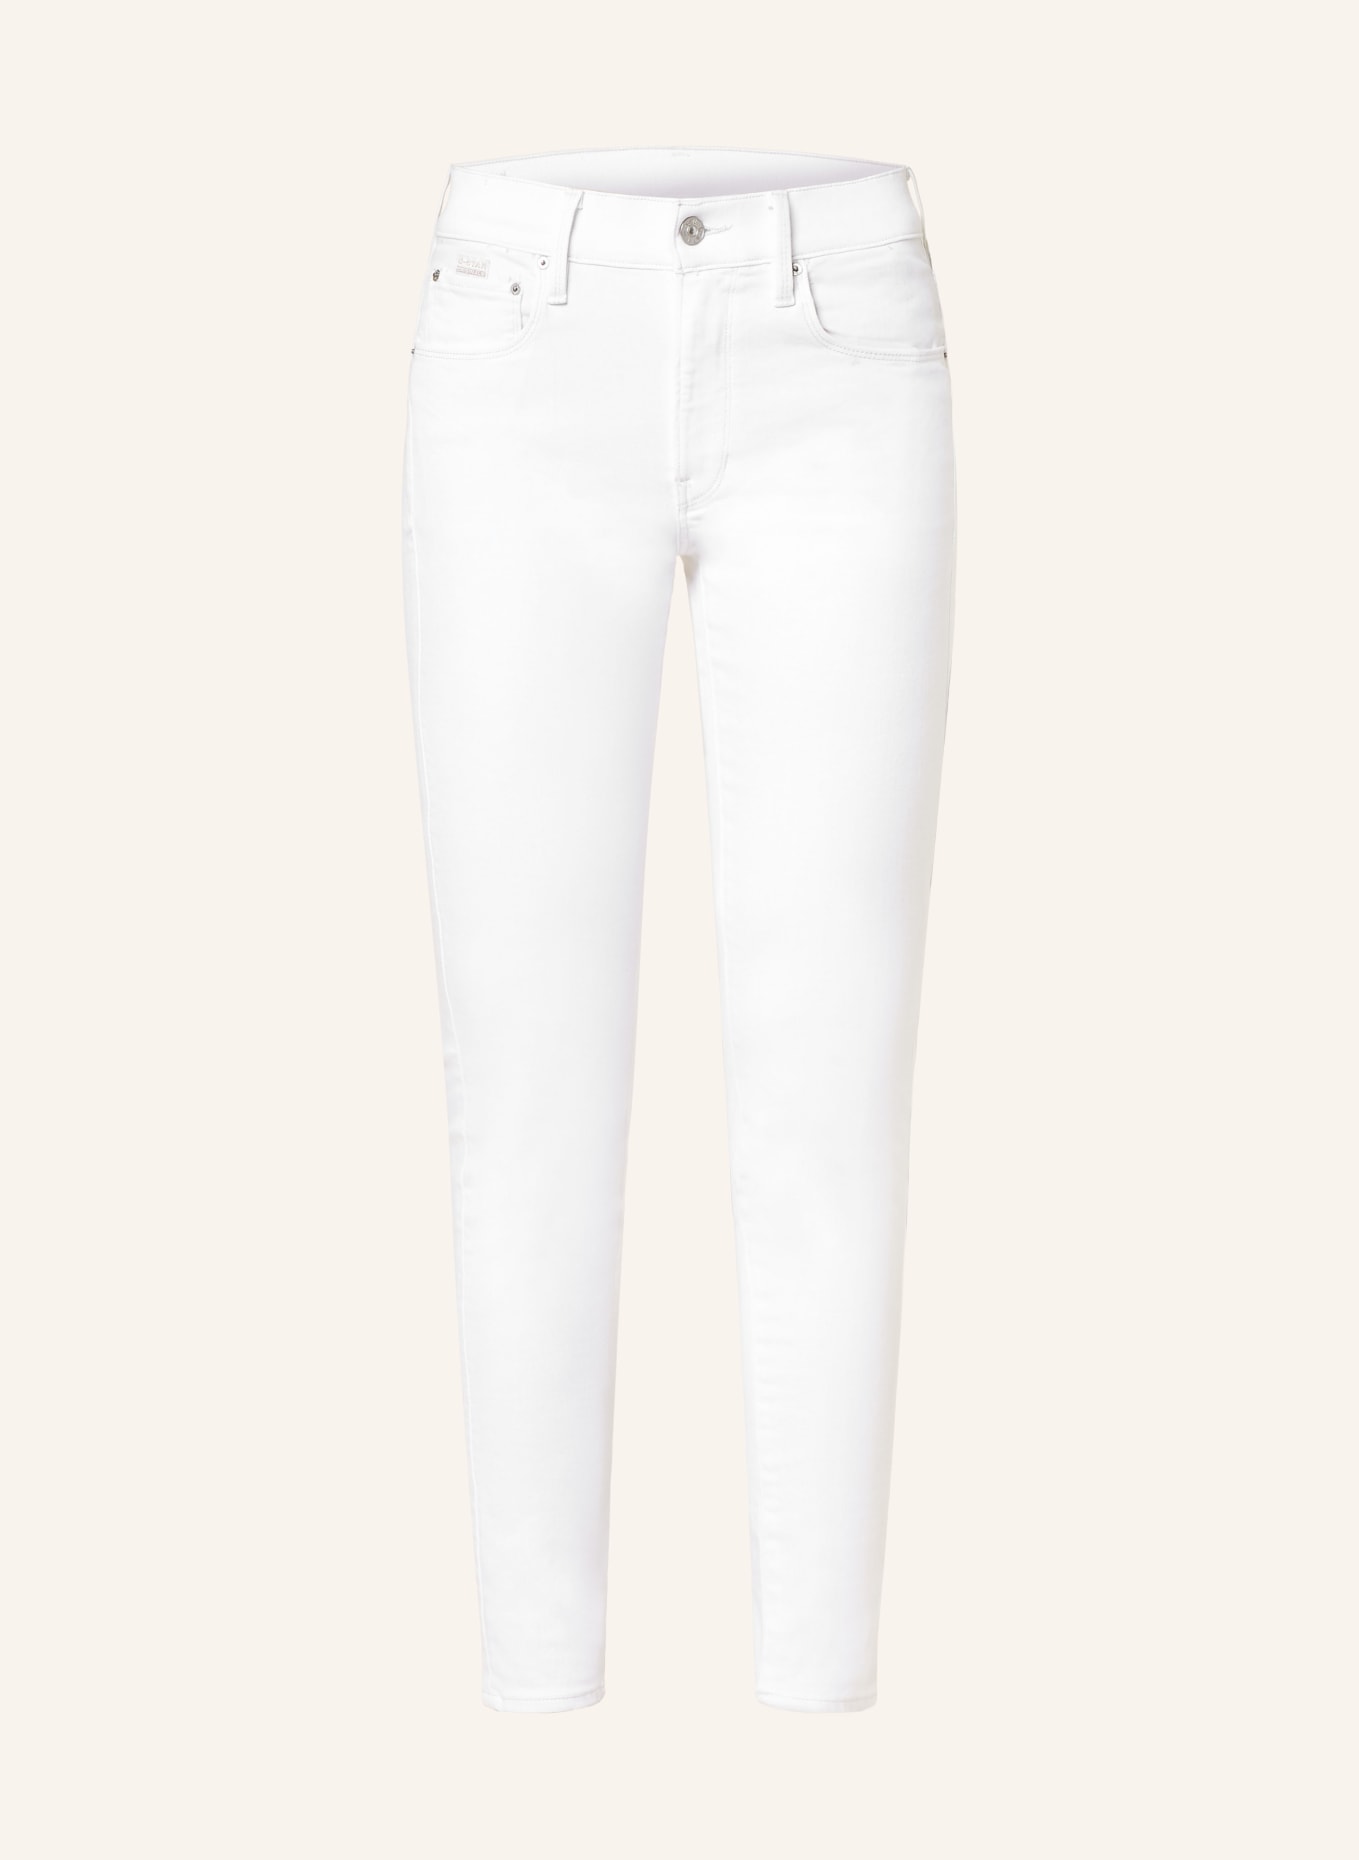 G-Star RAW Skinny Jeans, Farbe: G547 paper white gd (Bild 1)